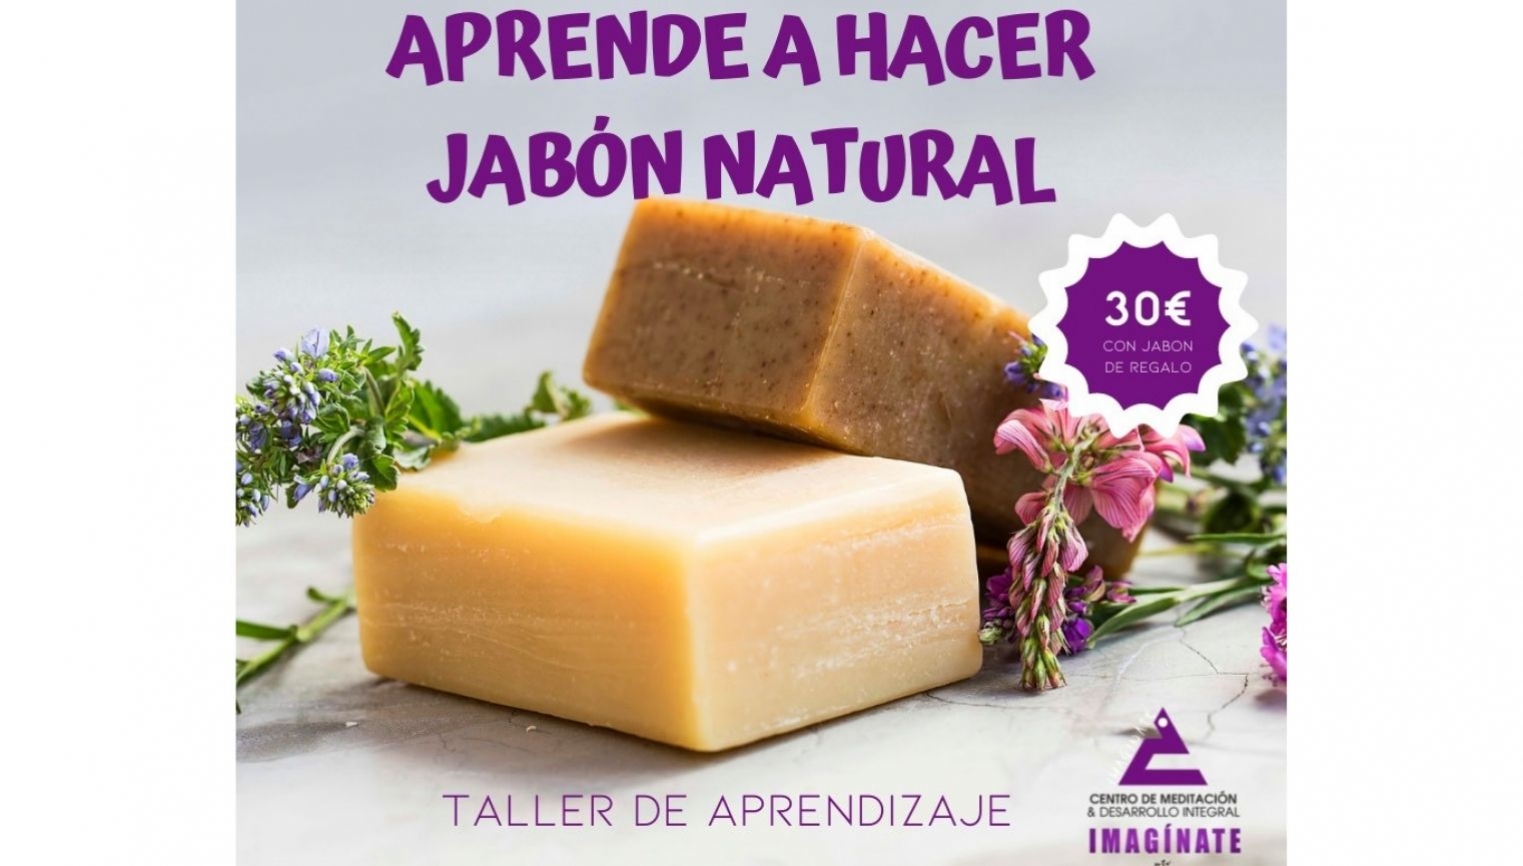 Aprende a Hacer Jabón artesanal natural 30€ con jabón de regalo - foto 6/6